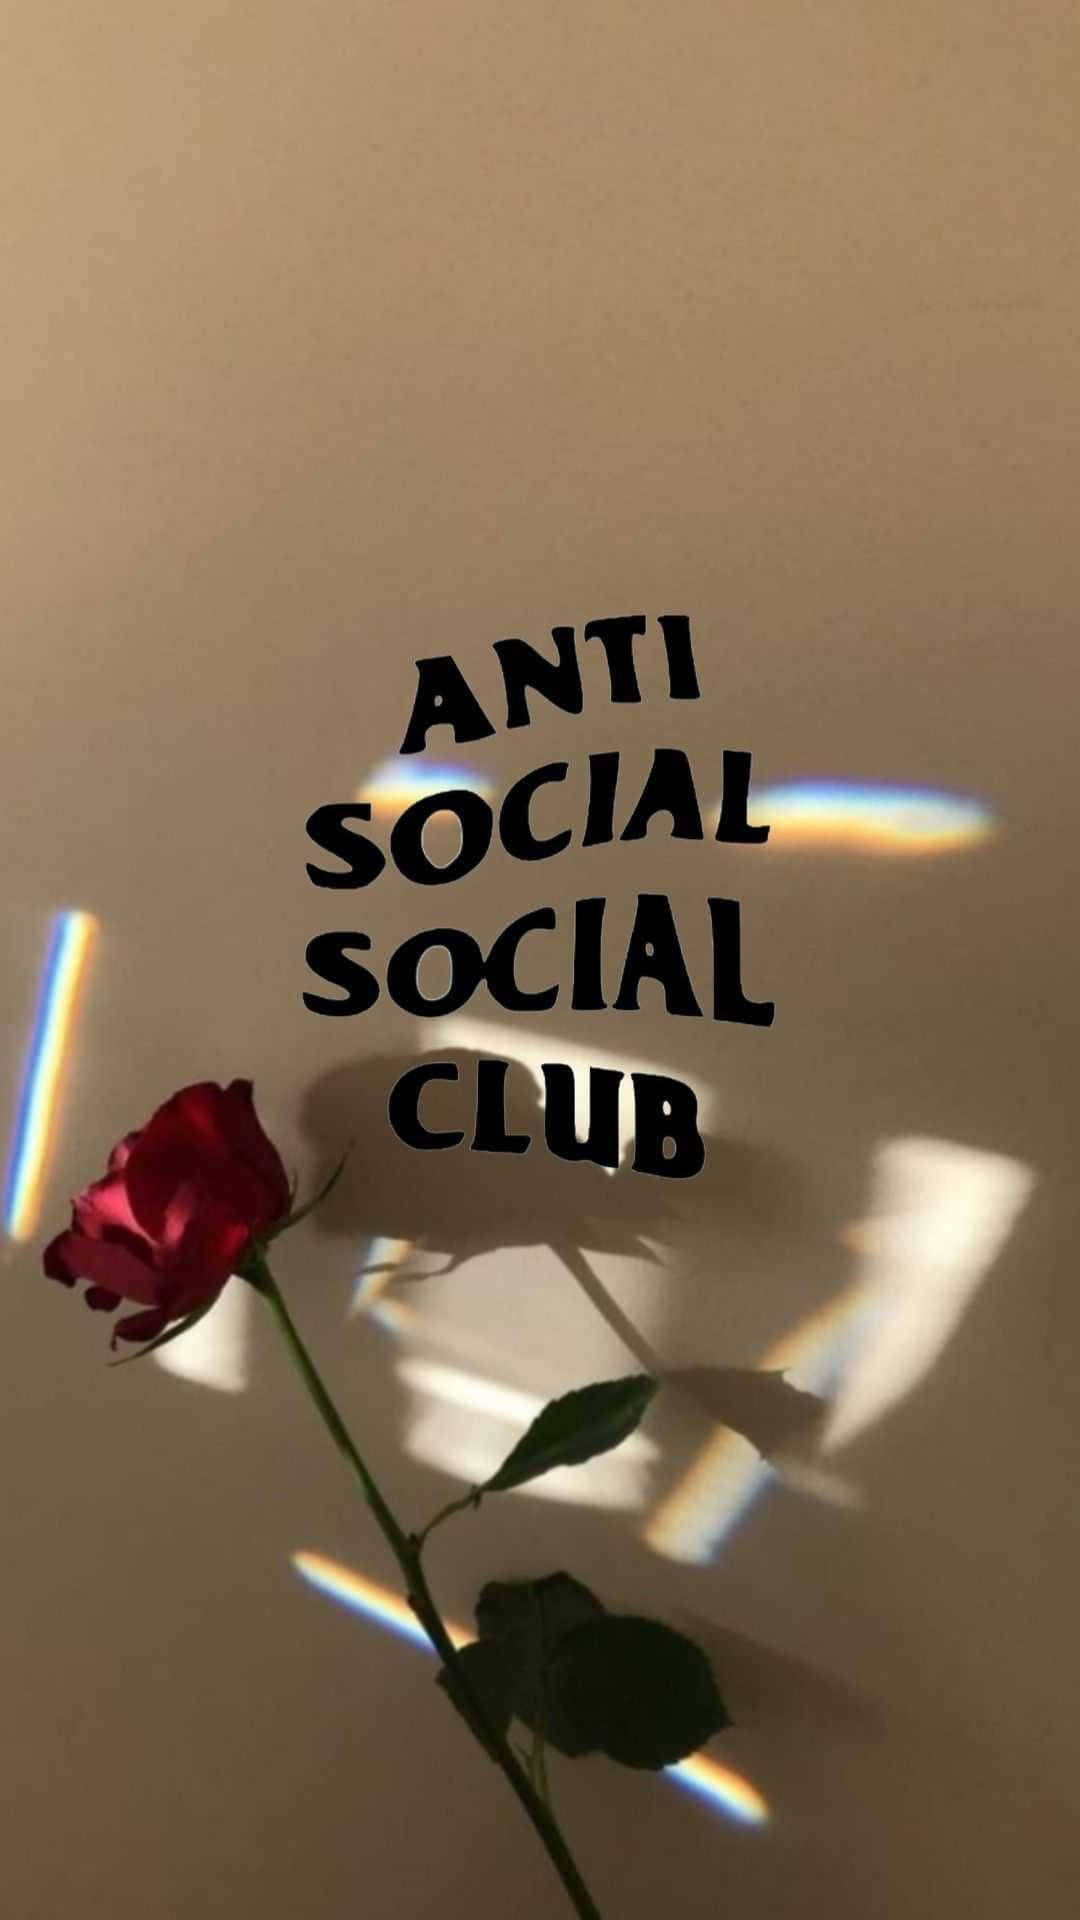 Anti Social Club Iphone 1080 X 1920 Wallpaper